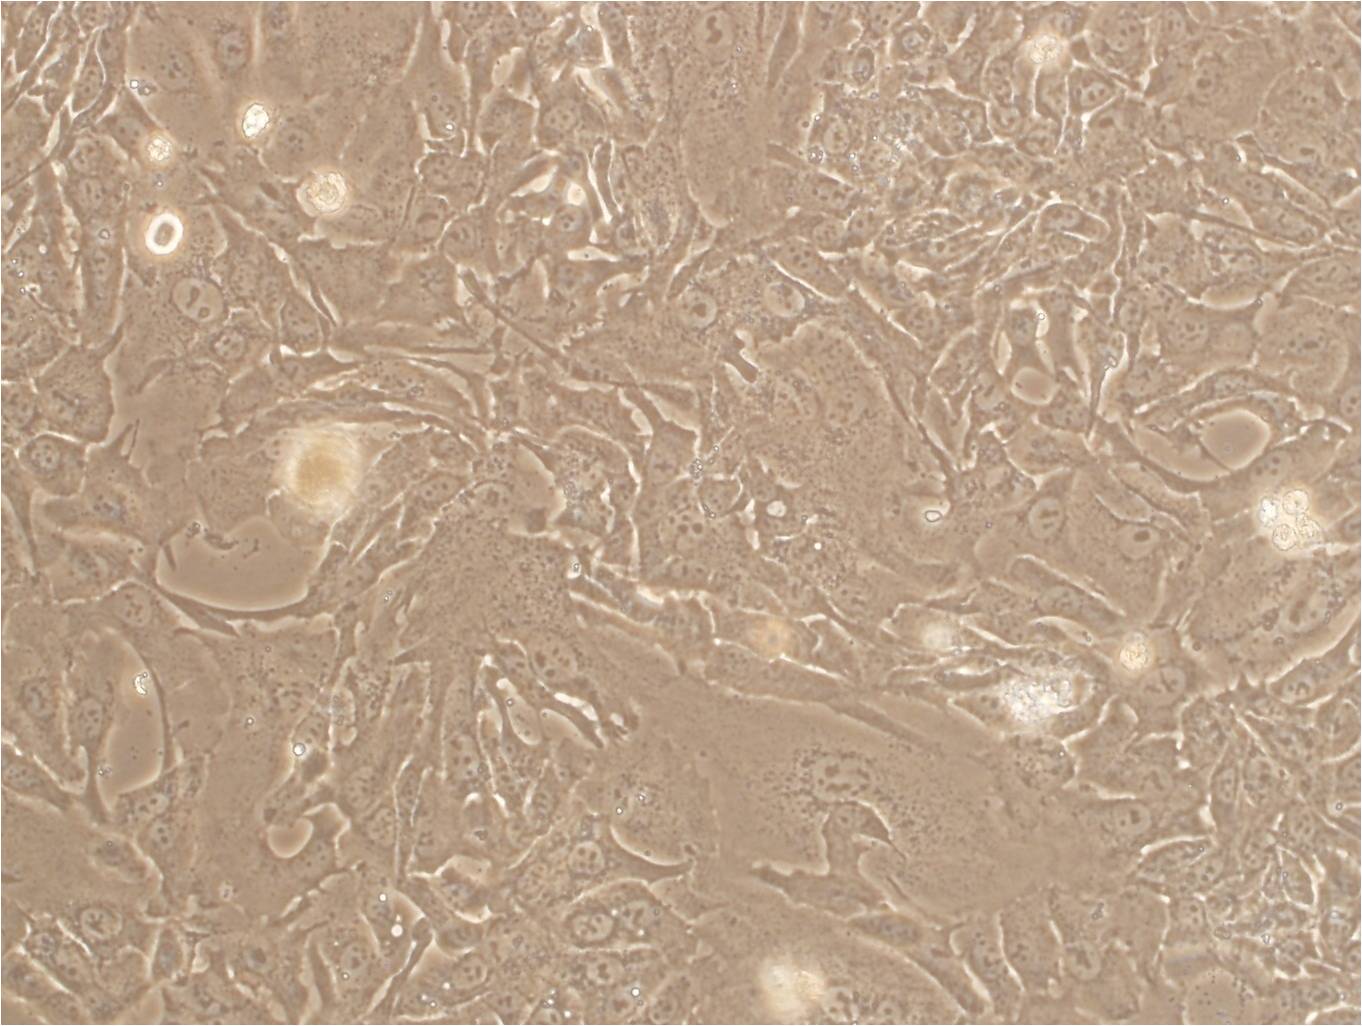 alphaTC1 Clone 6 cell line小鼠胰岛素瘤胰岛a细胞系